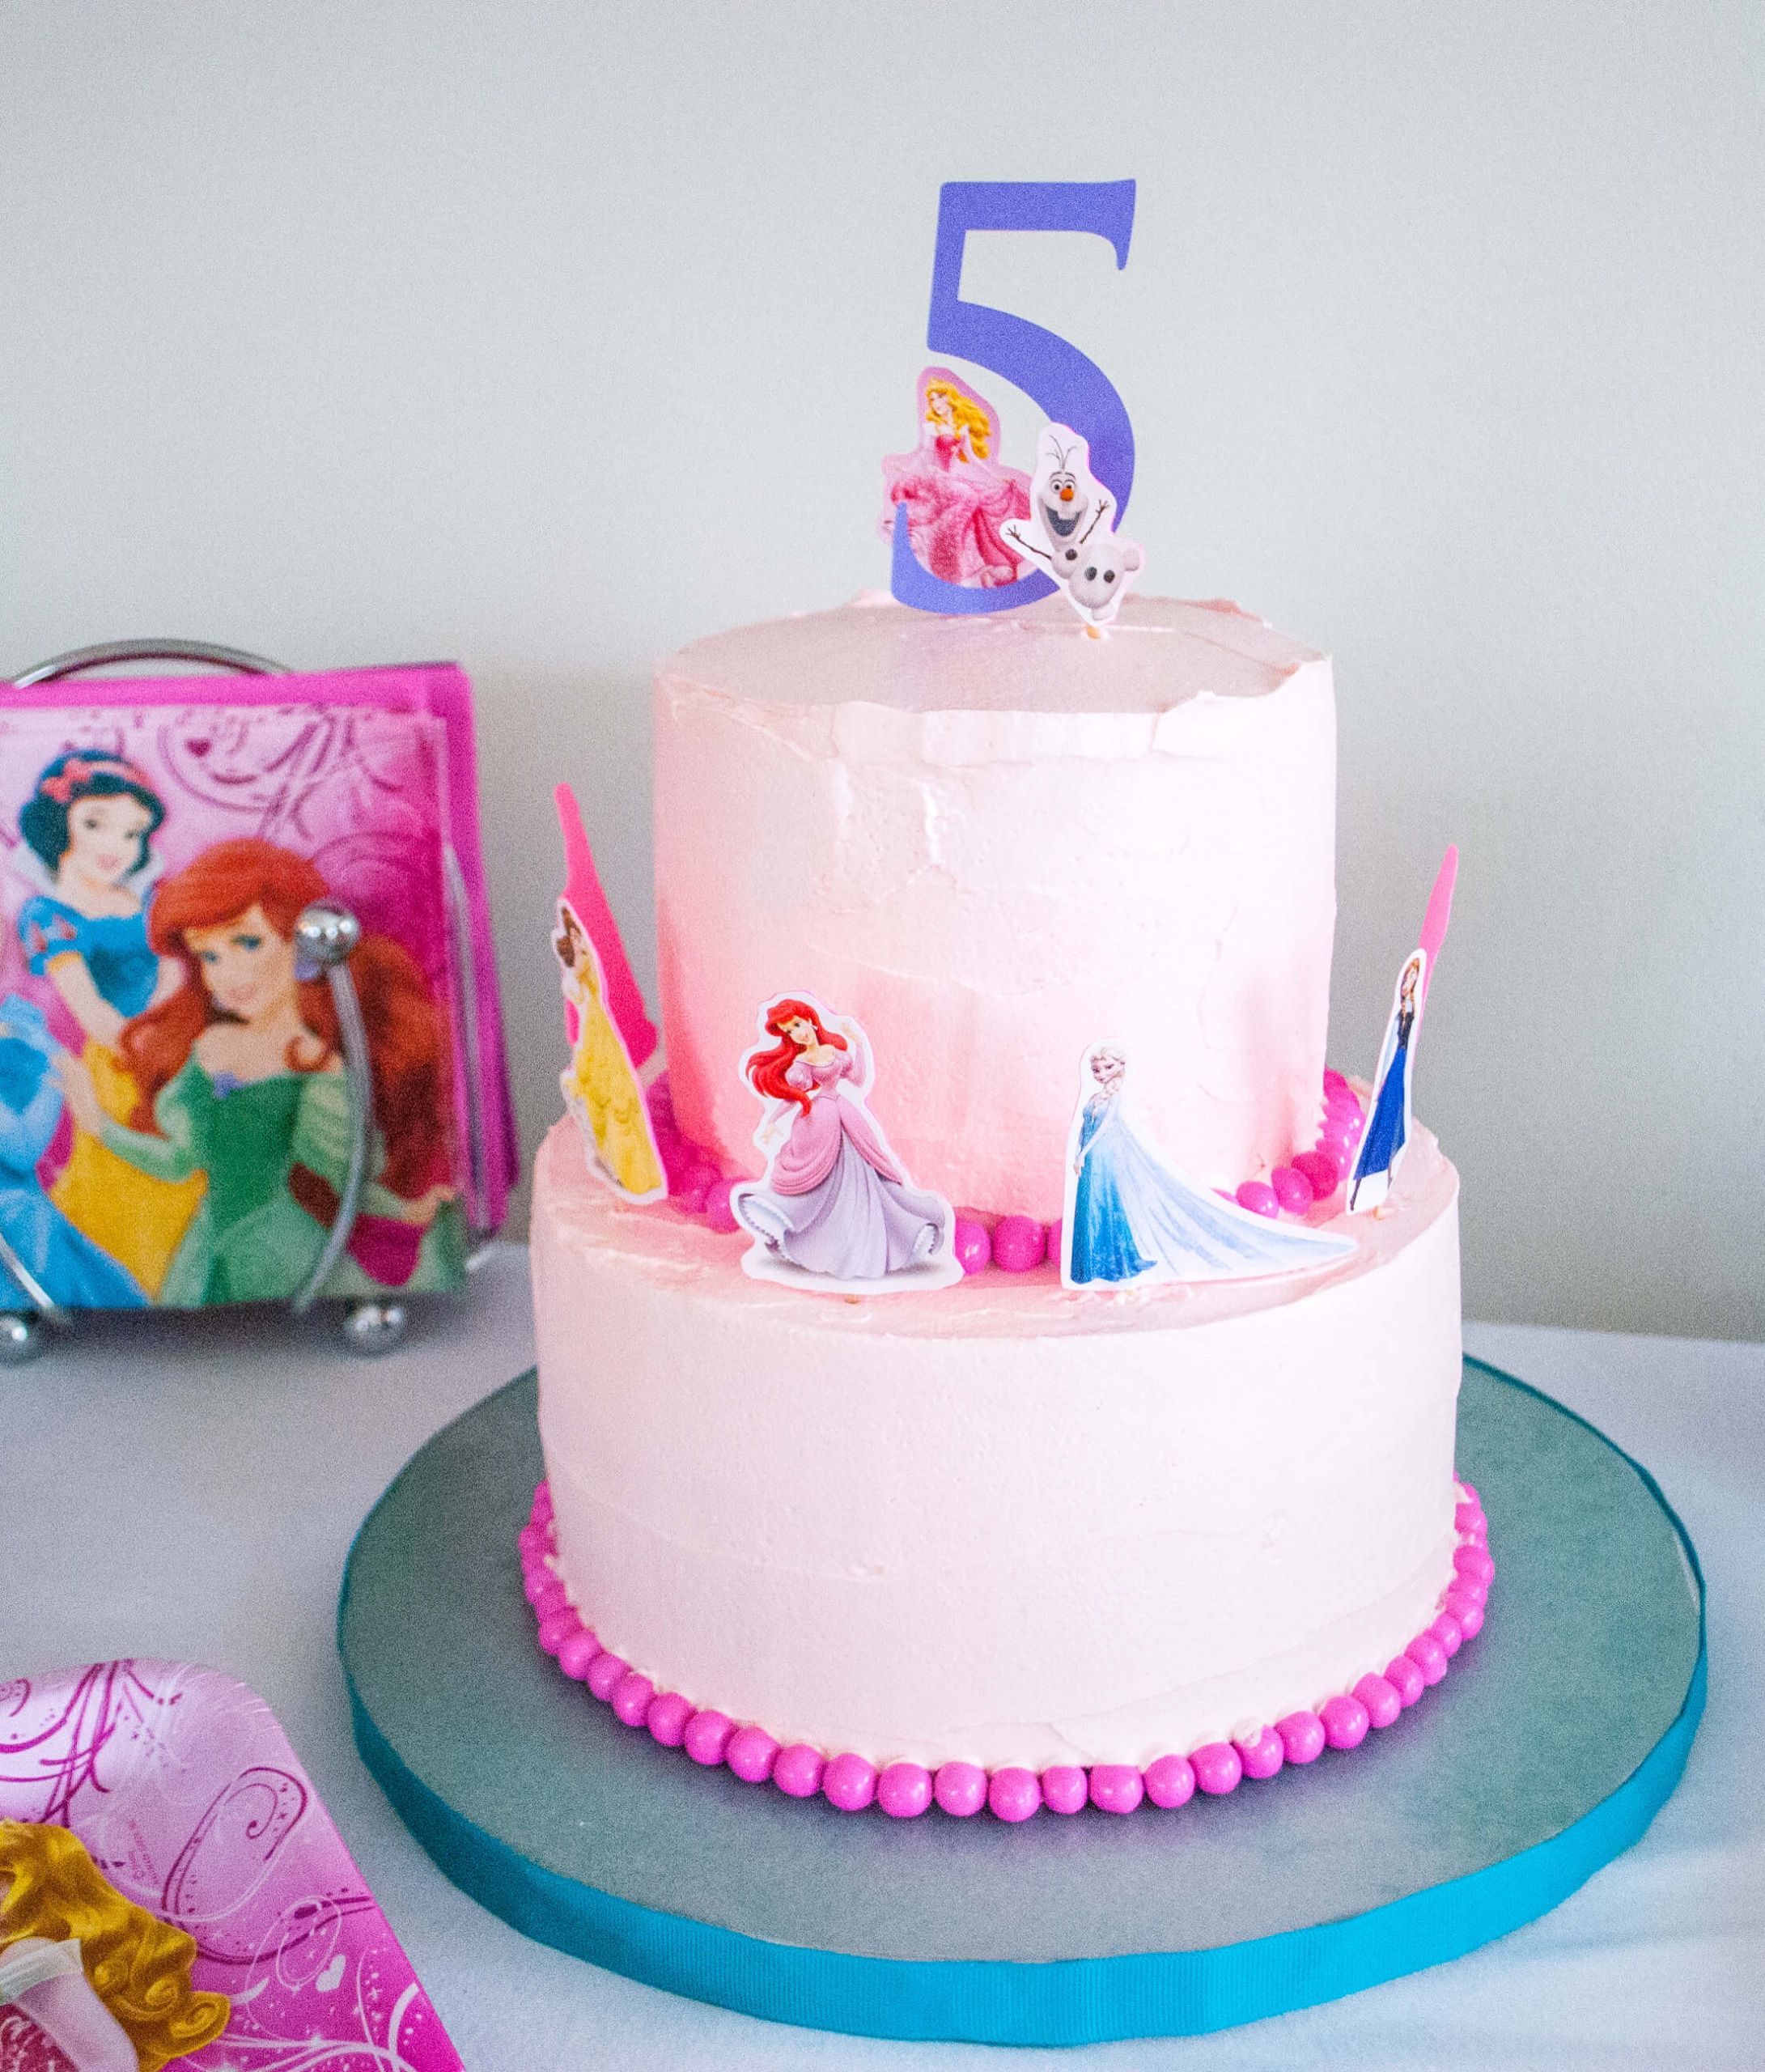 Easy To Make Birthday Cakes
 Make an Easy Disney Princess Birthday Cake Using Stickers